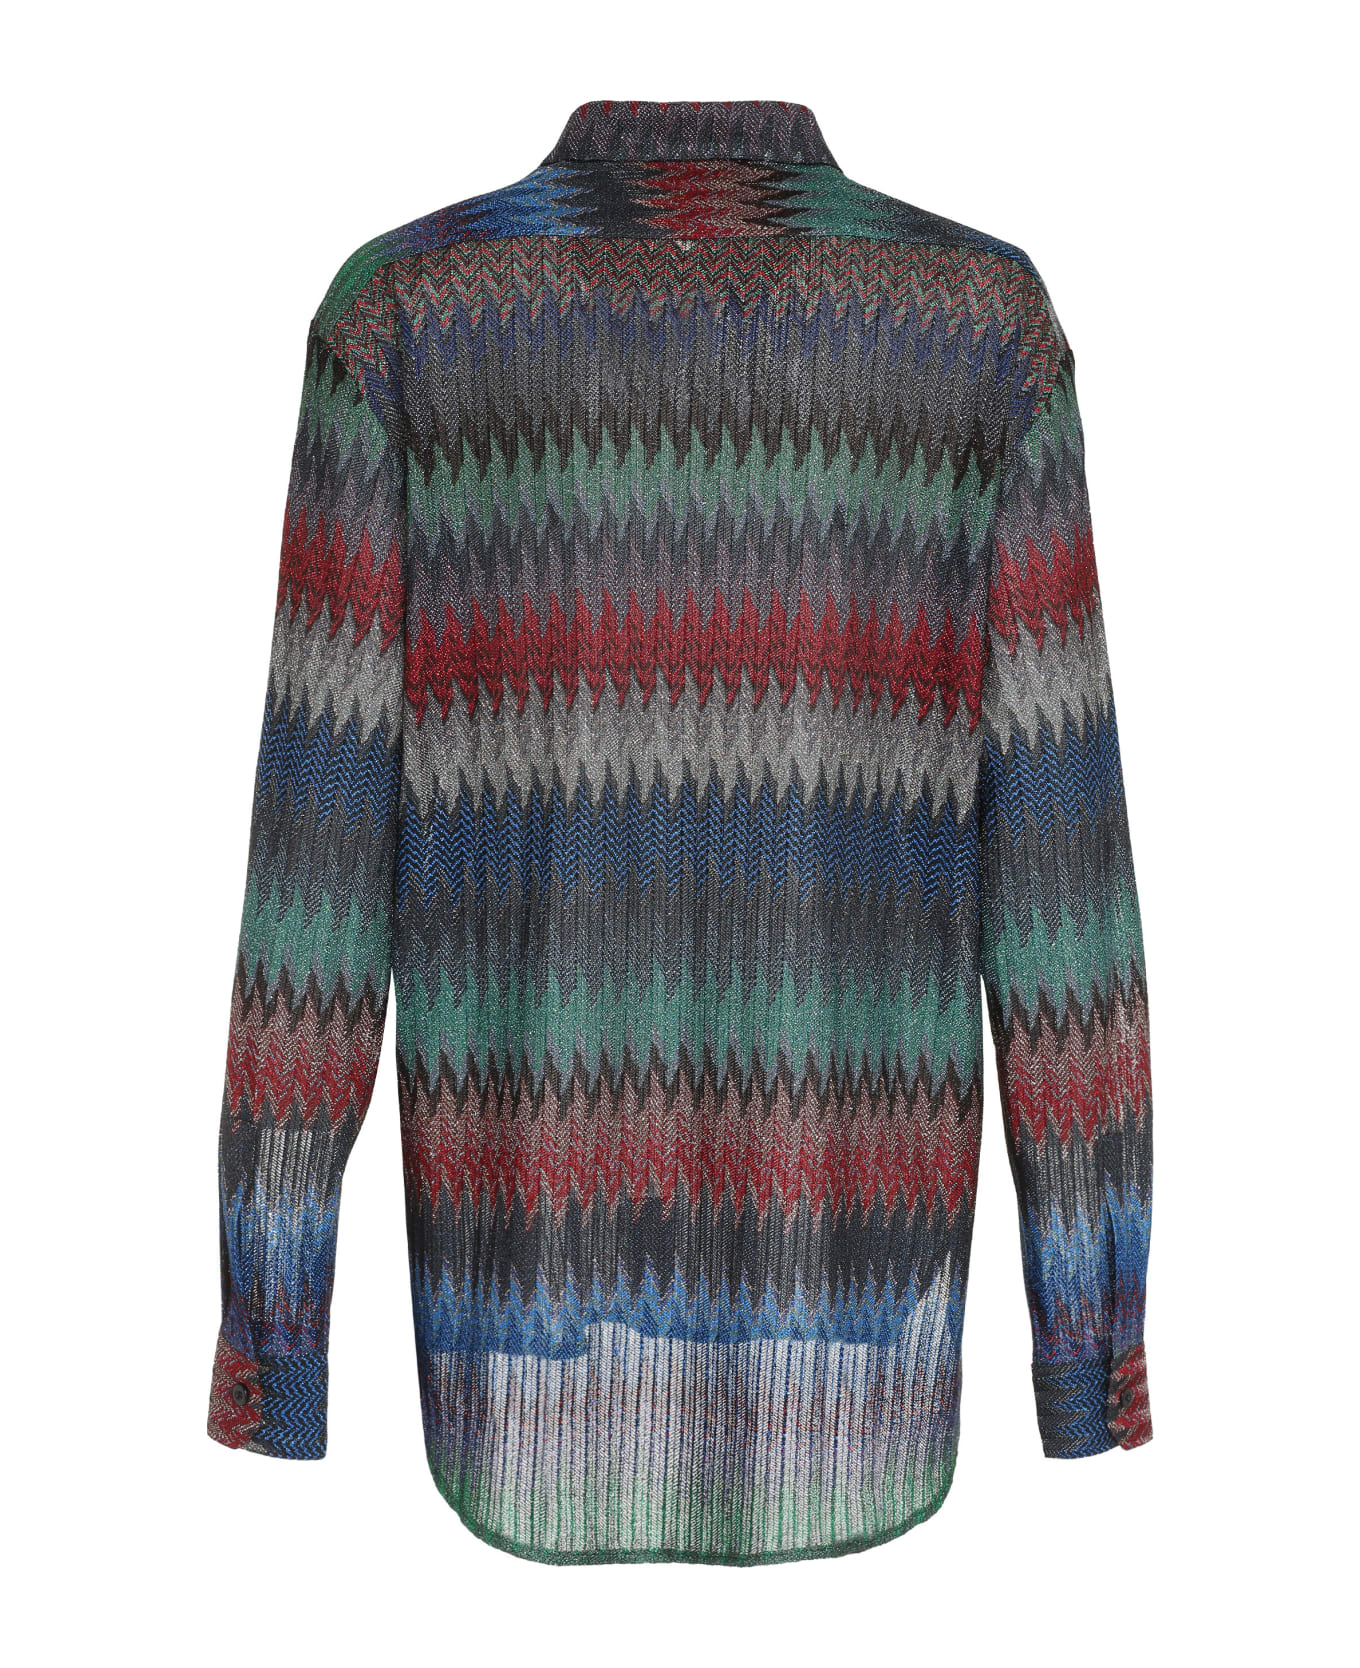 Missoni Chevron Knit Shirt - Multicolor